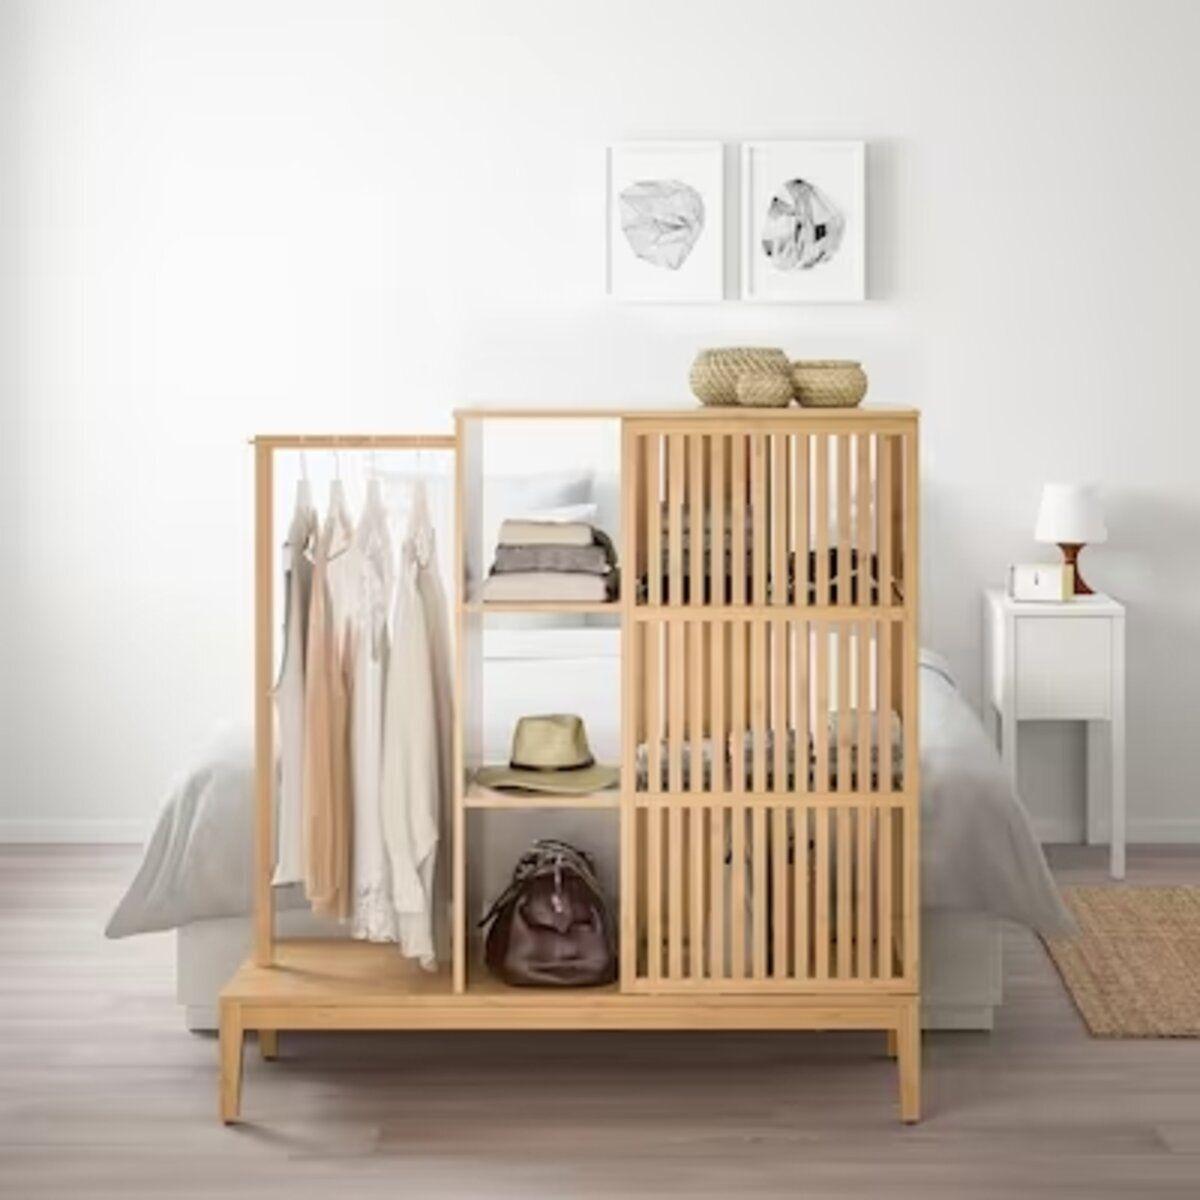 Este armario de IKEA permite infinitas posibilidades en tu hogar.